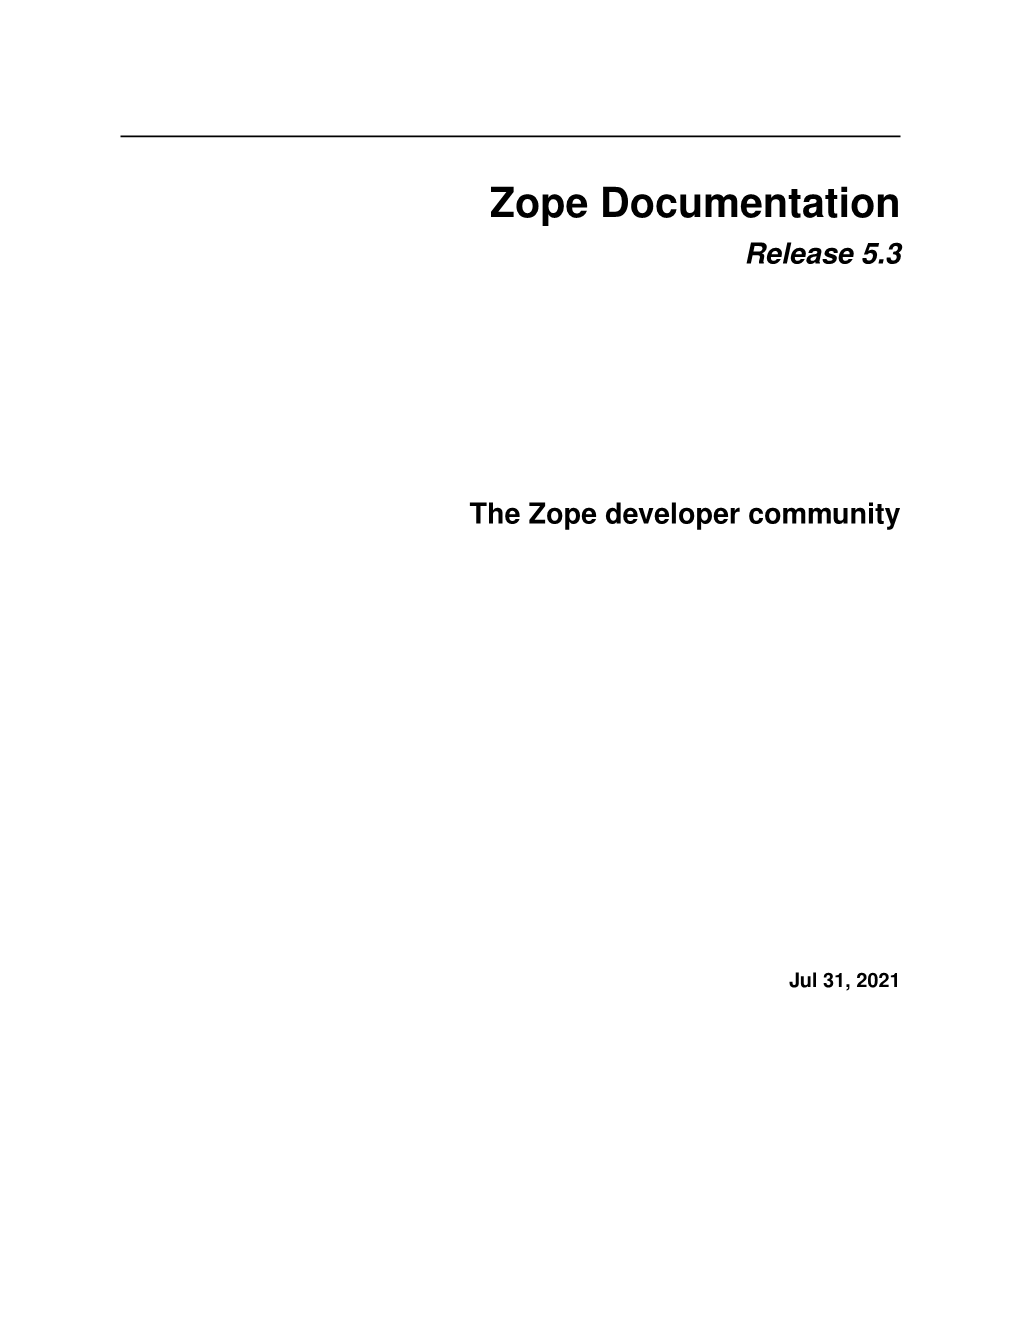 Zope Documentation Release 5.3